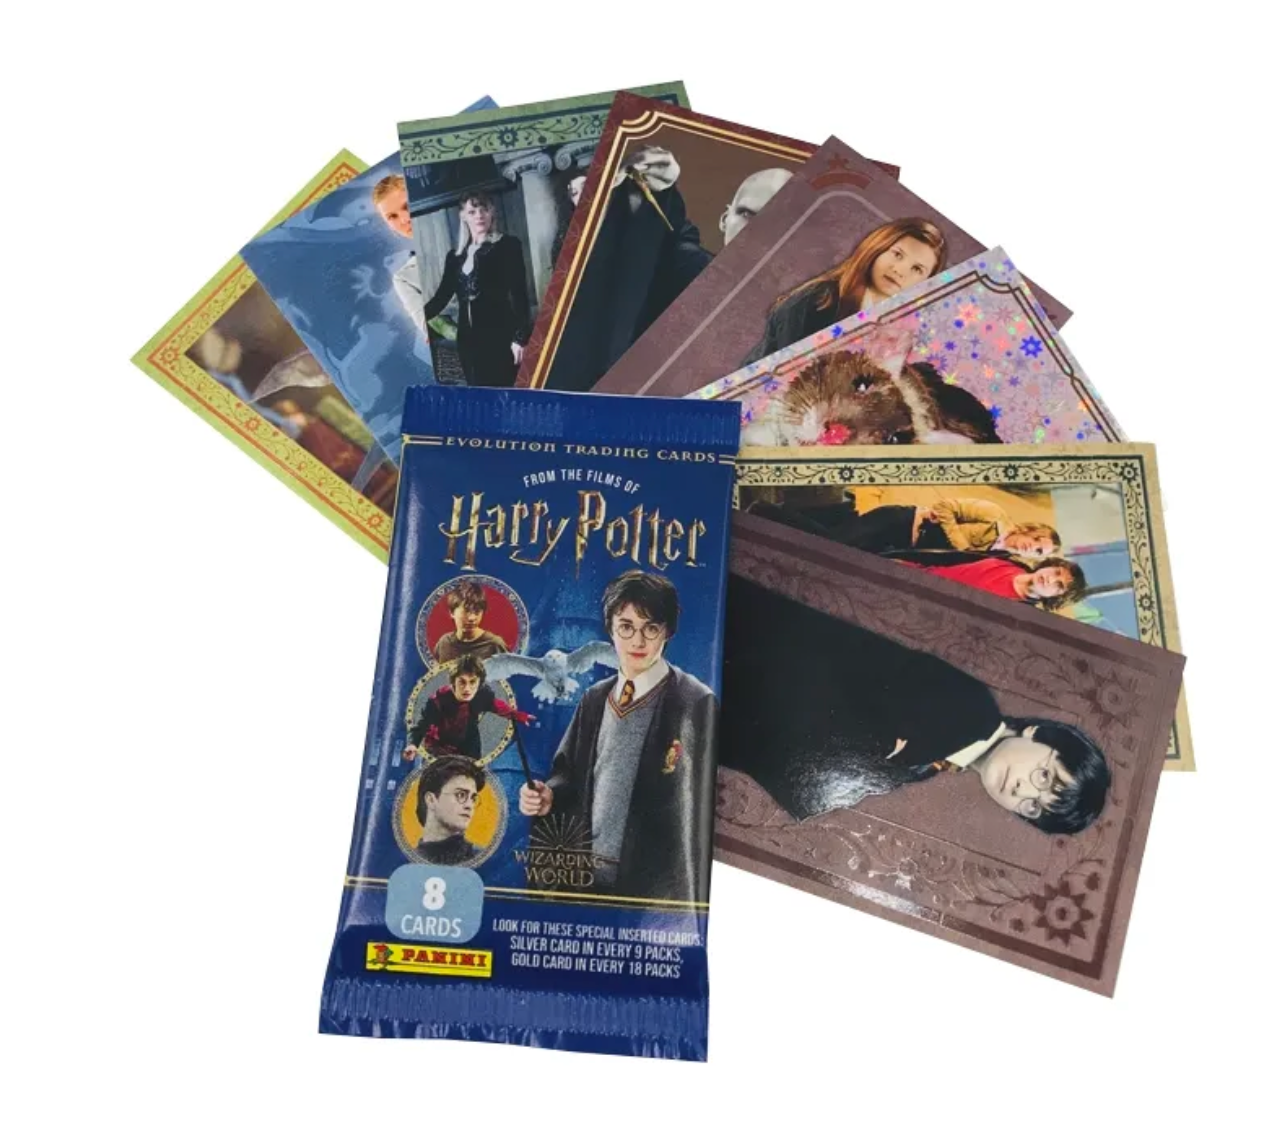 Harry Potter - Evolution Trading Cards - Pack (8 Cards)